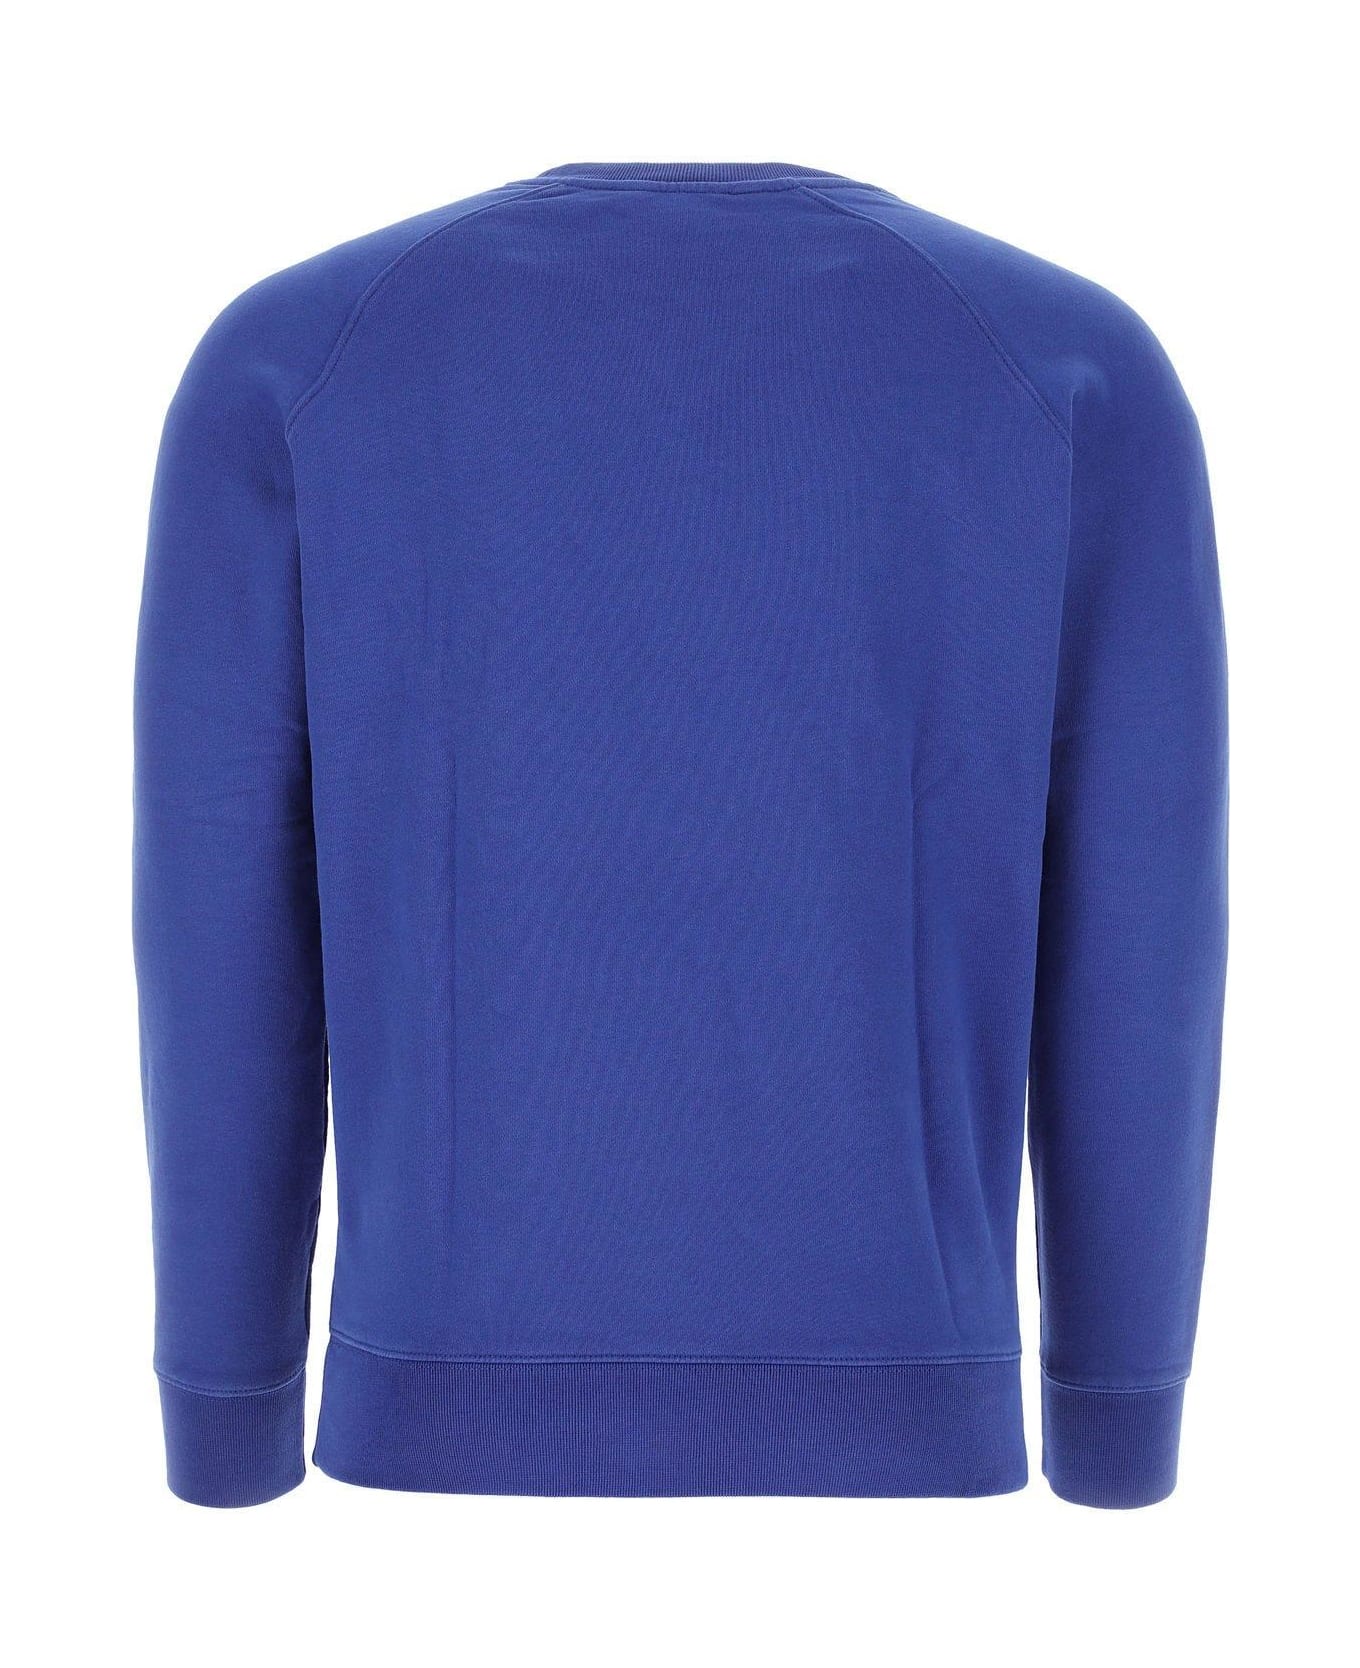 Maison Kitsuné Blue Cotton Sweatshirt - NAVY